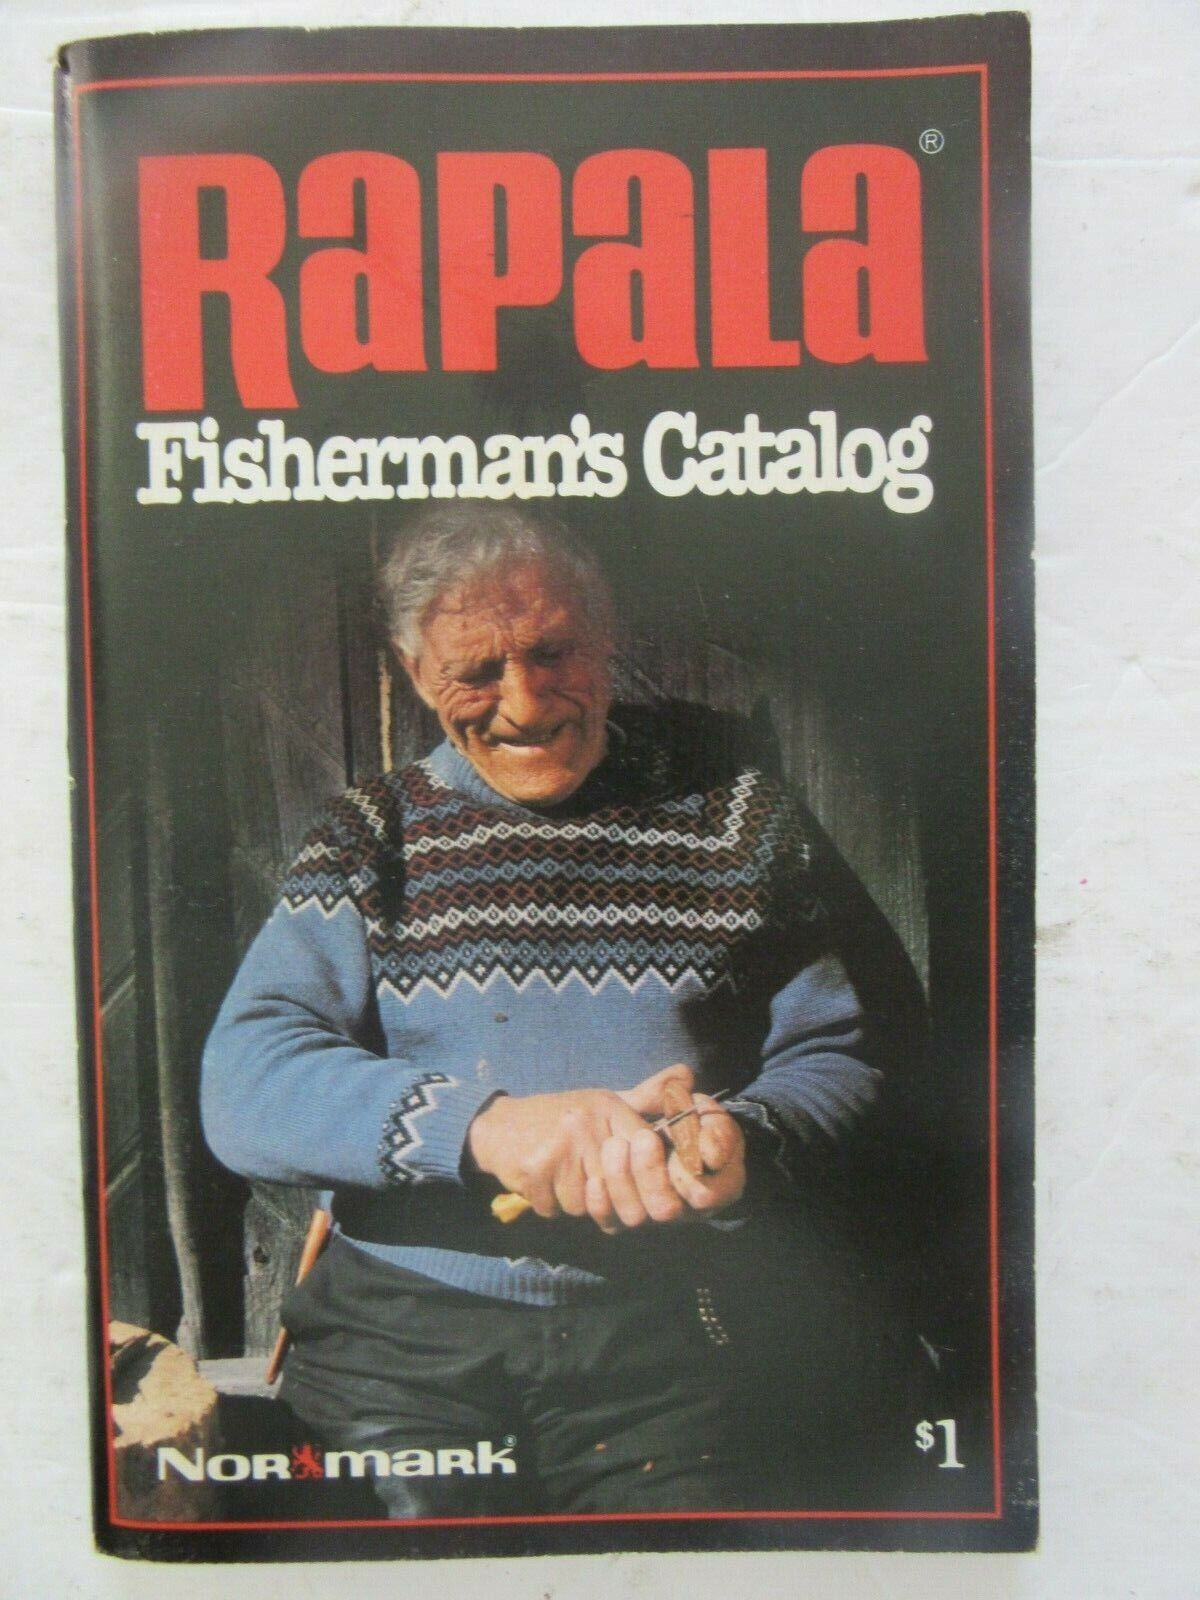 Rapala Fisherman's Catalog 1980 Normark Corporation book